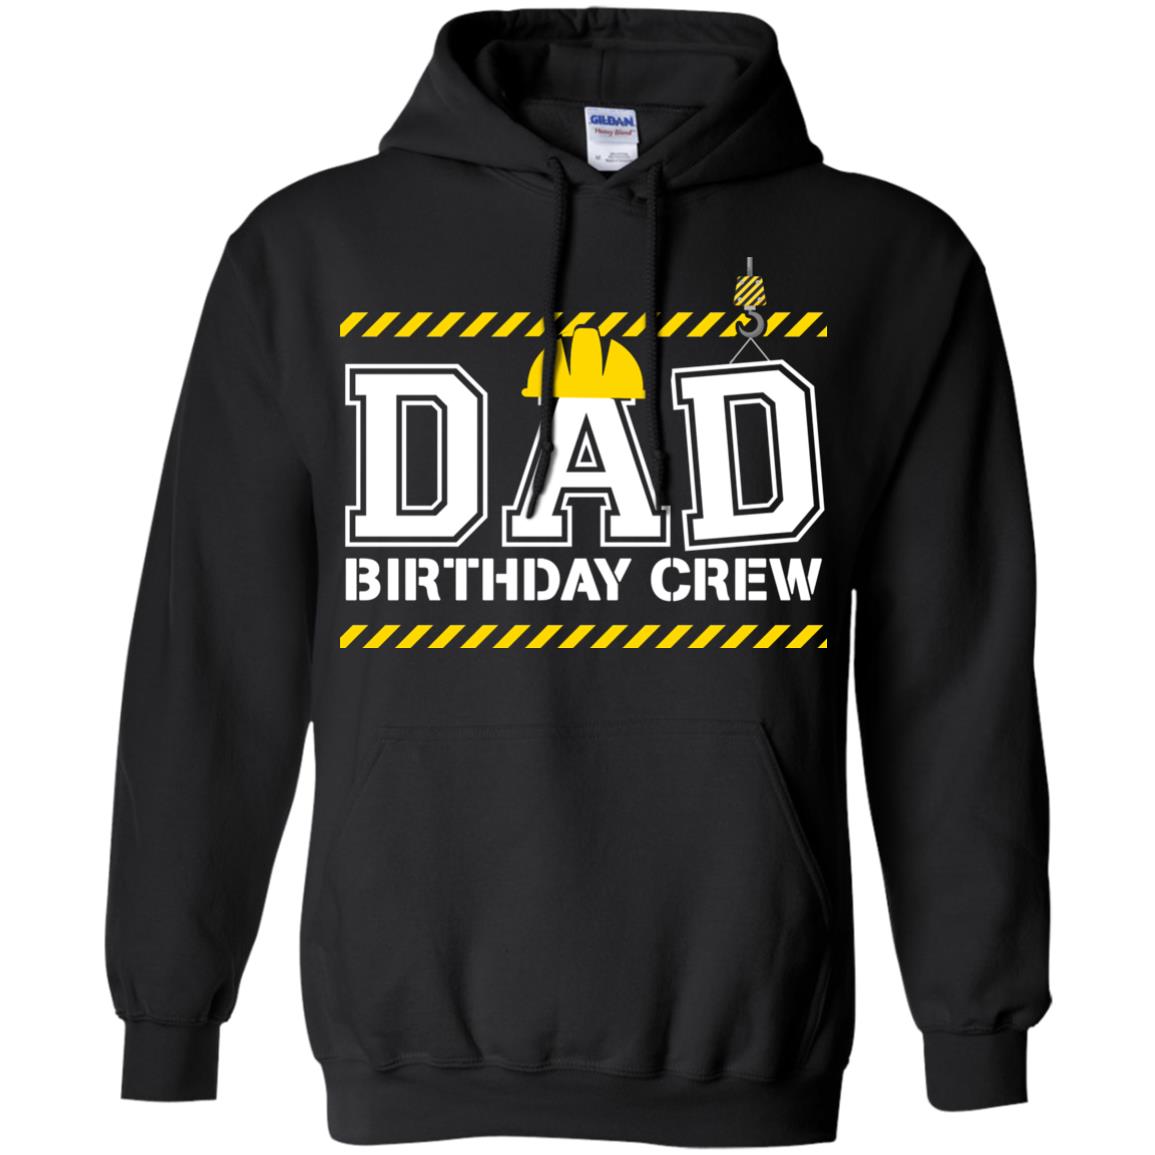 Dad Birthday Crew Construction Worker Shirt DaddyG185 Gildan Pullover Hoodie 8 oz.